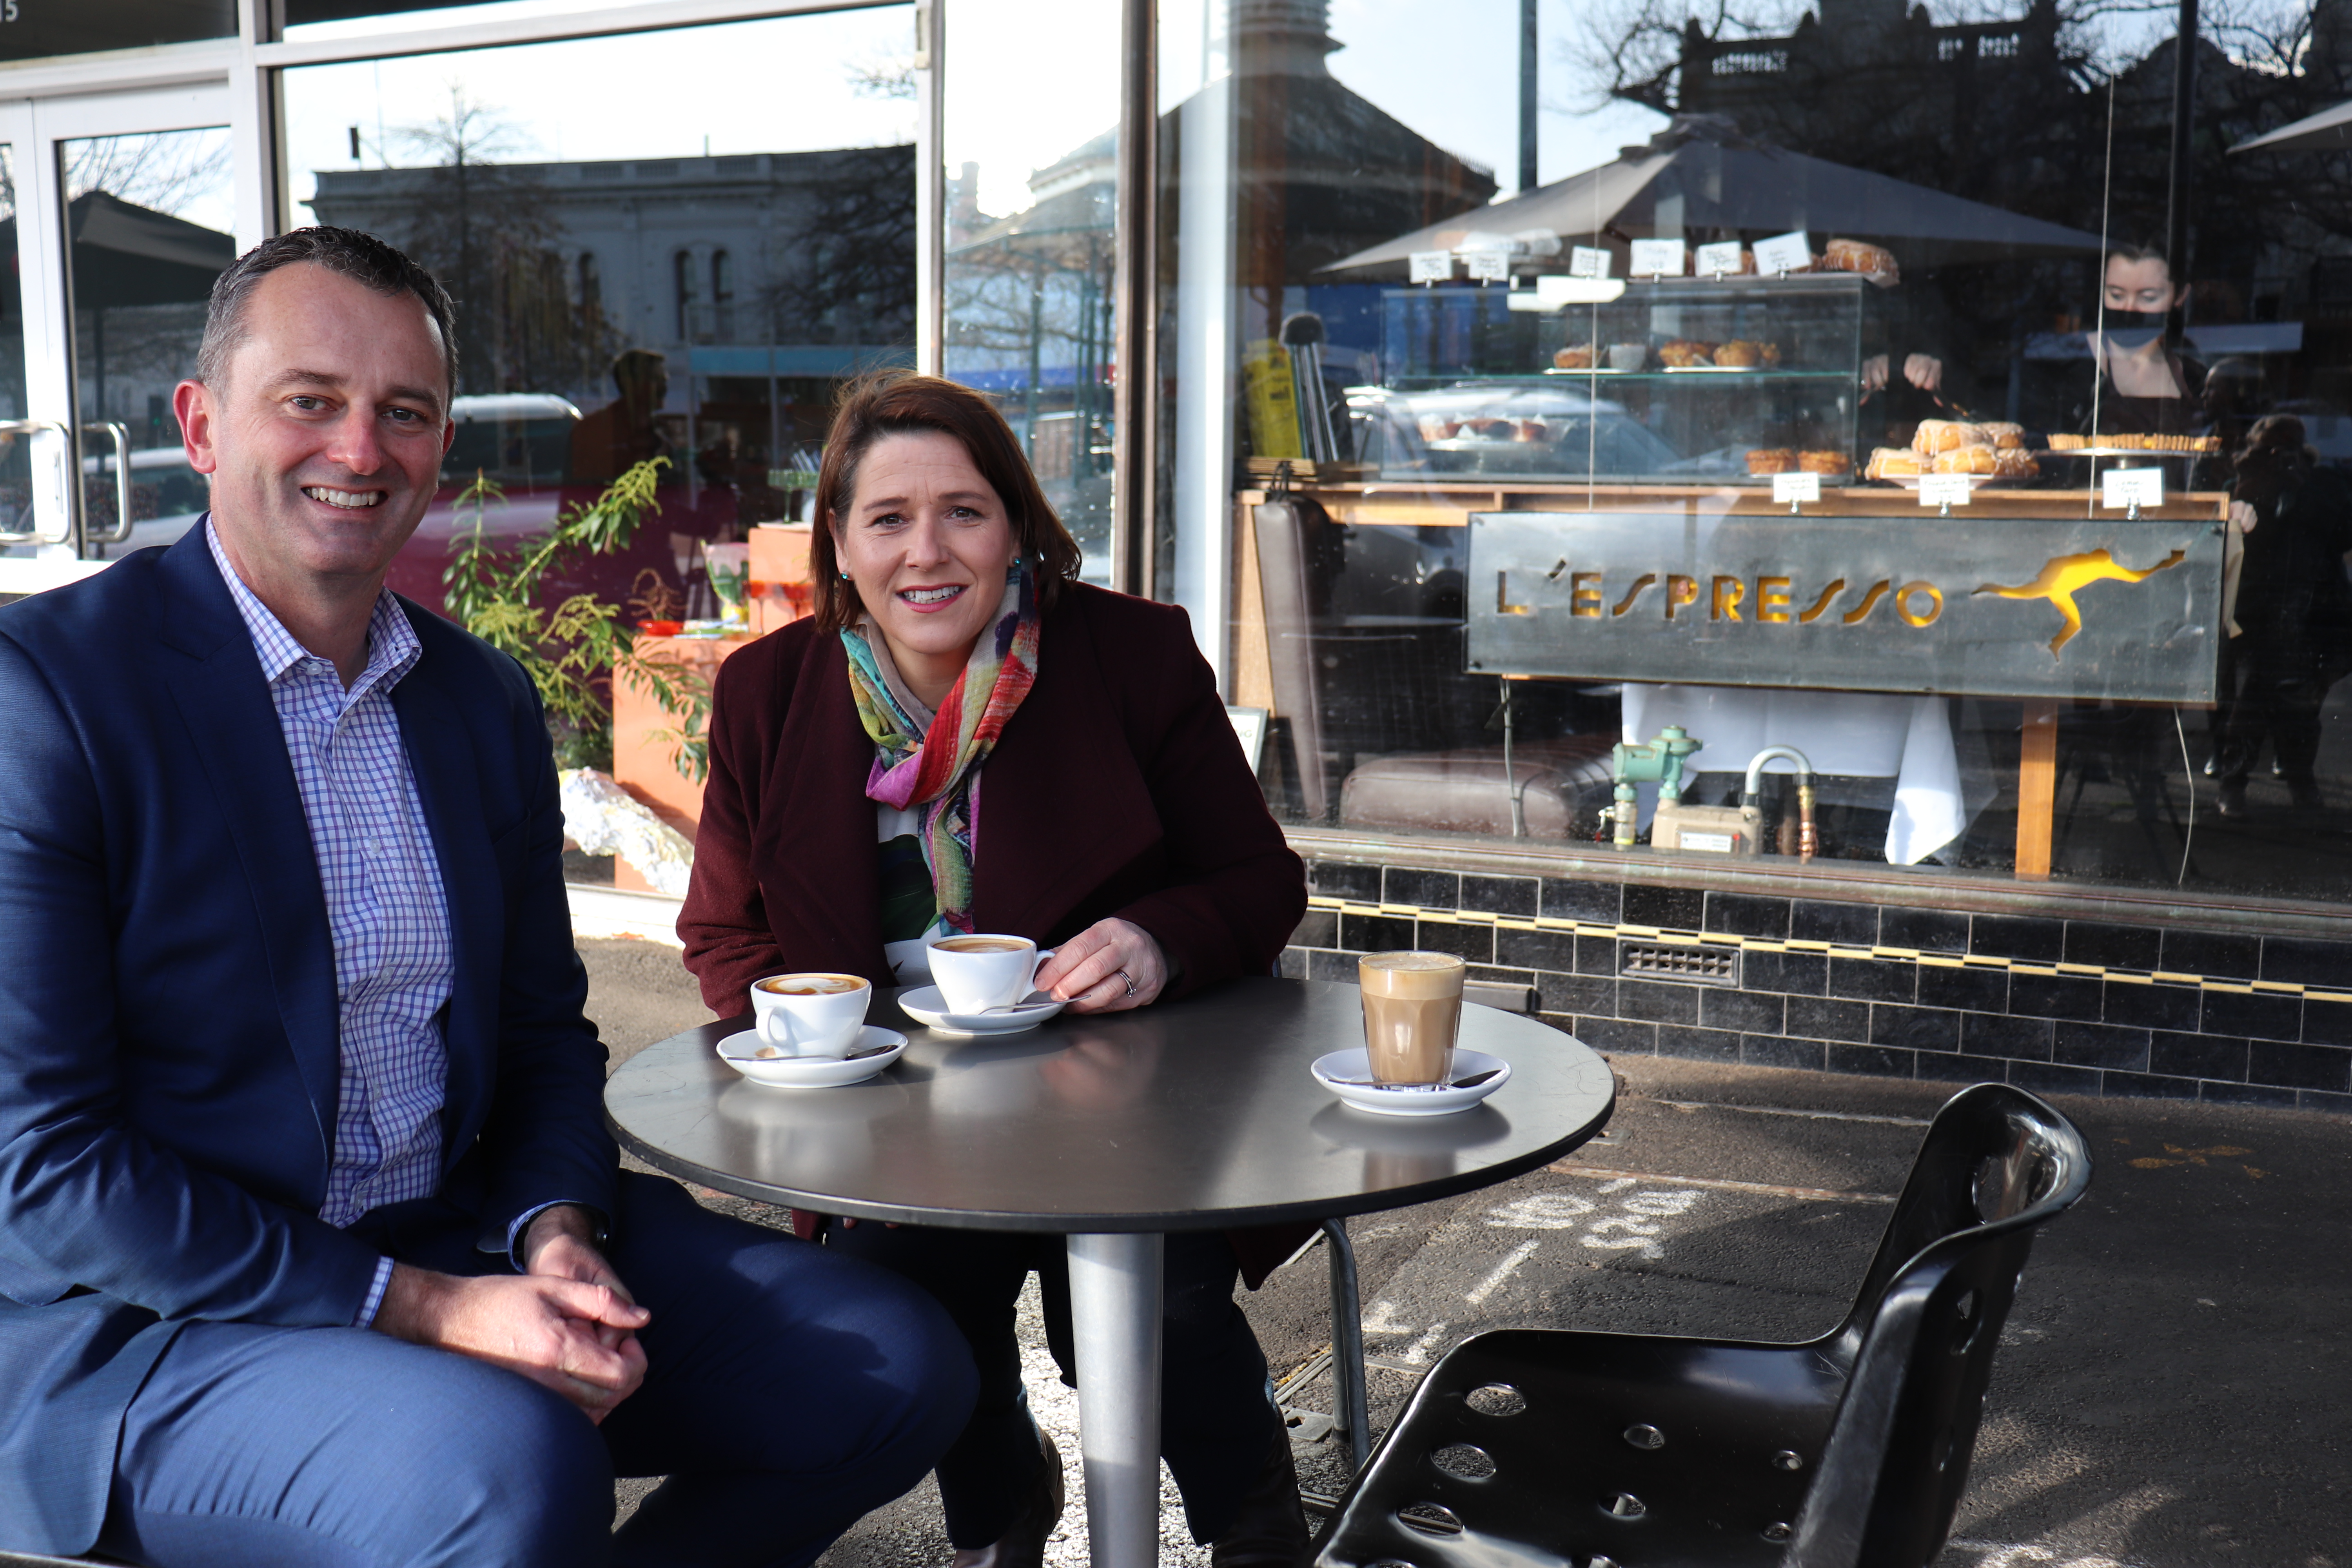 Mayor of Ballarat Cr Daniel Moloney with Juliana Addison MP at L'Espresso